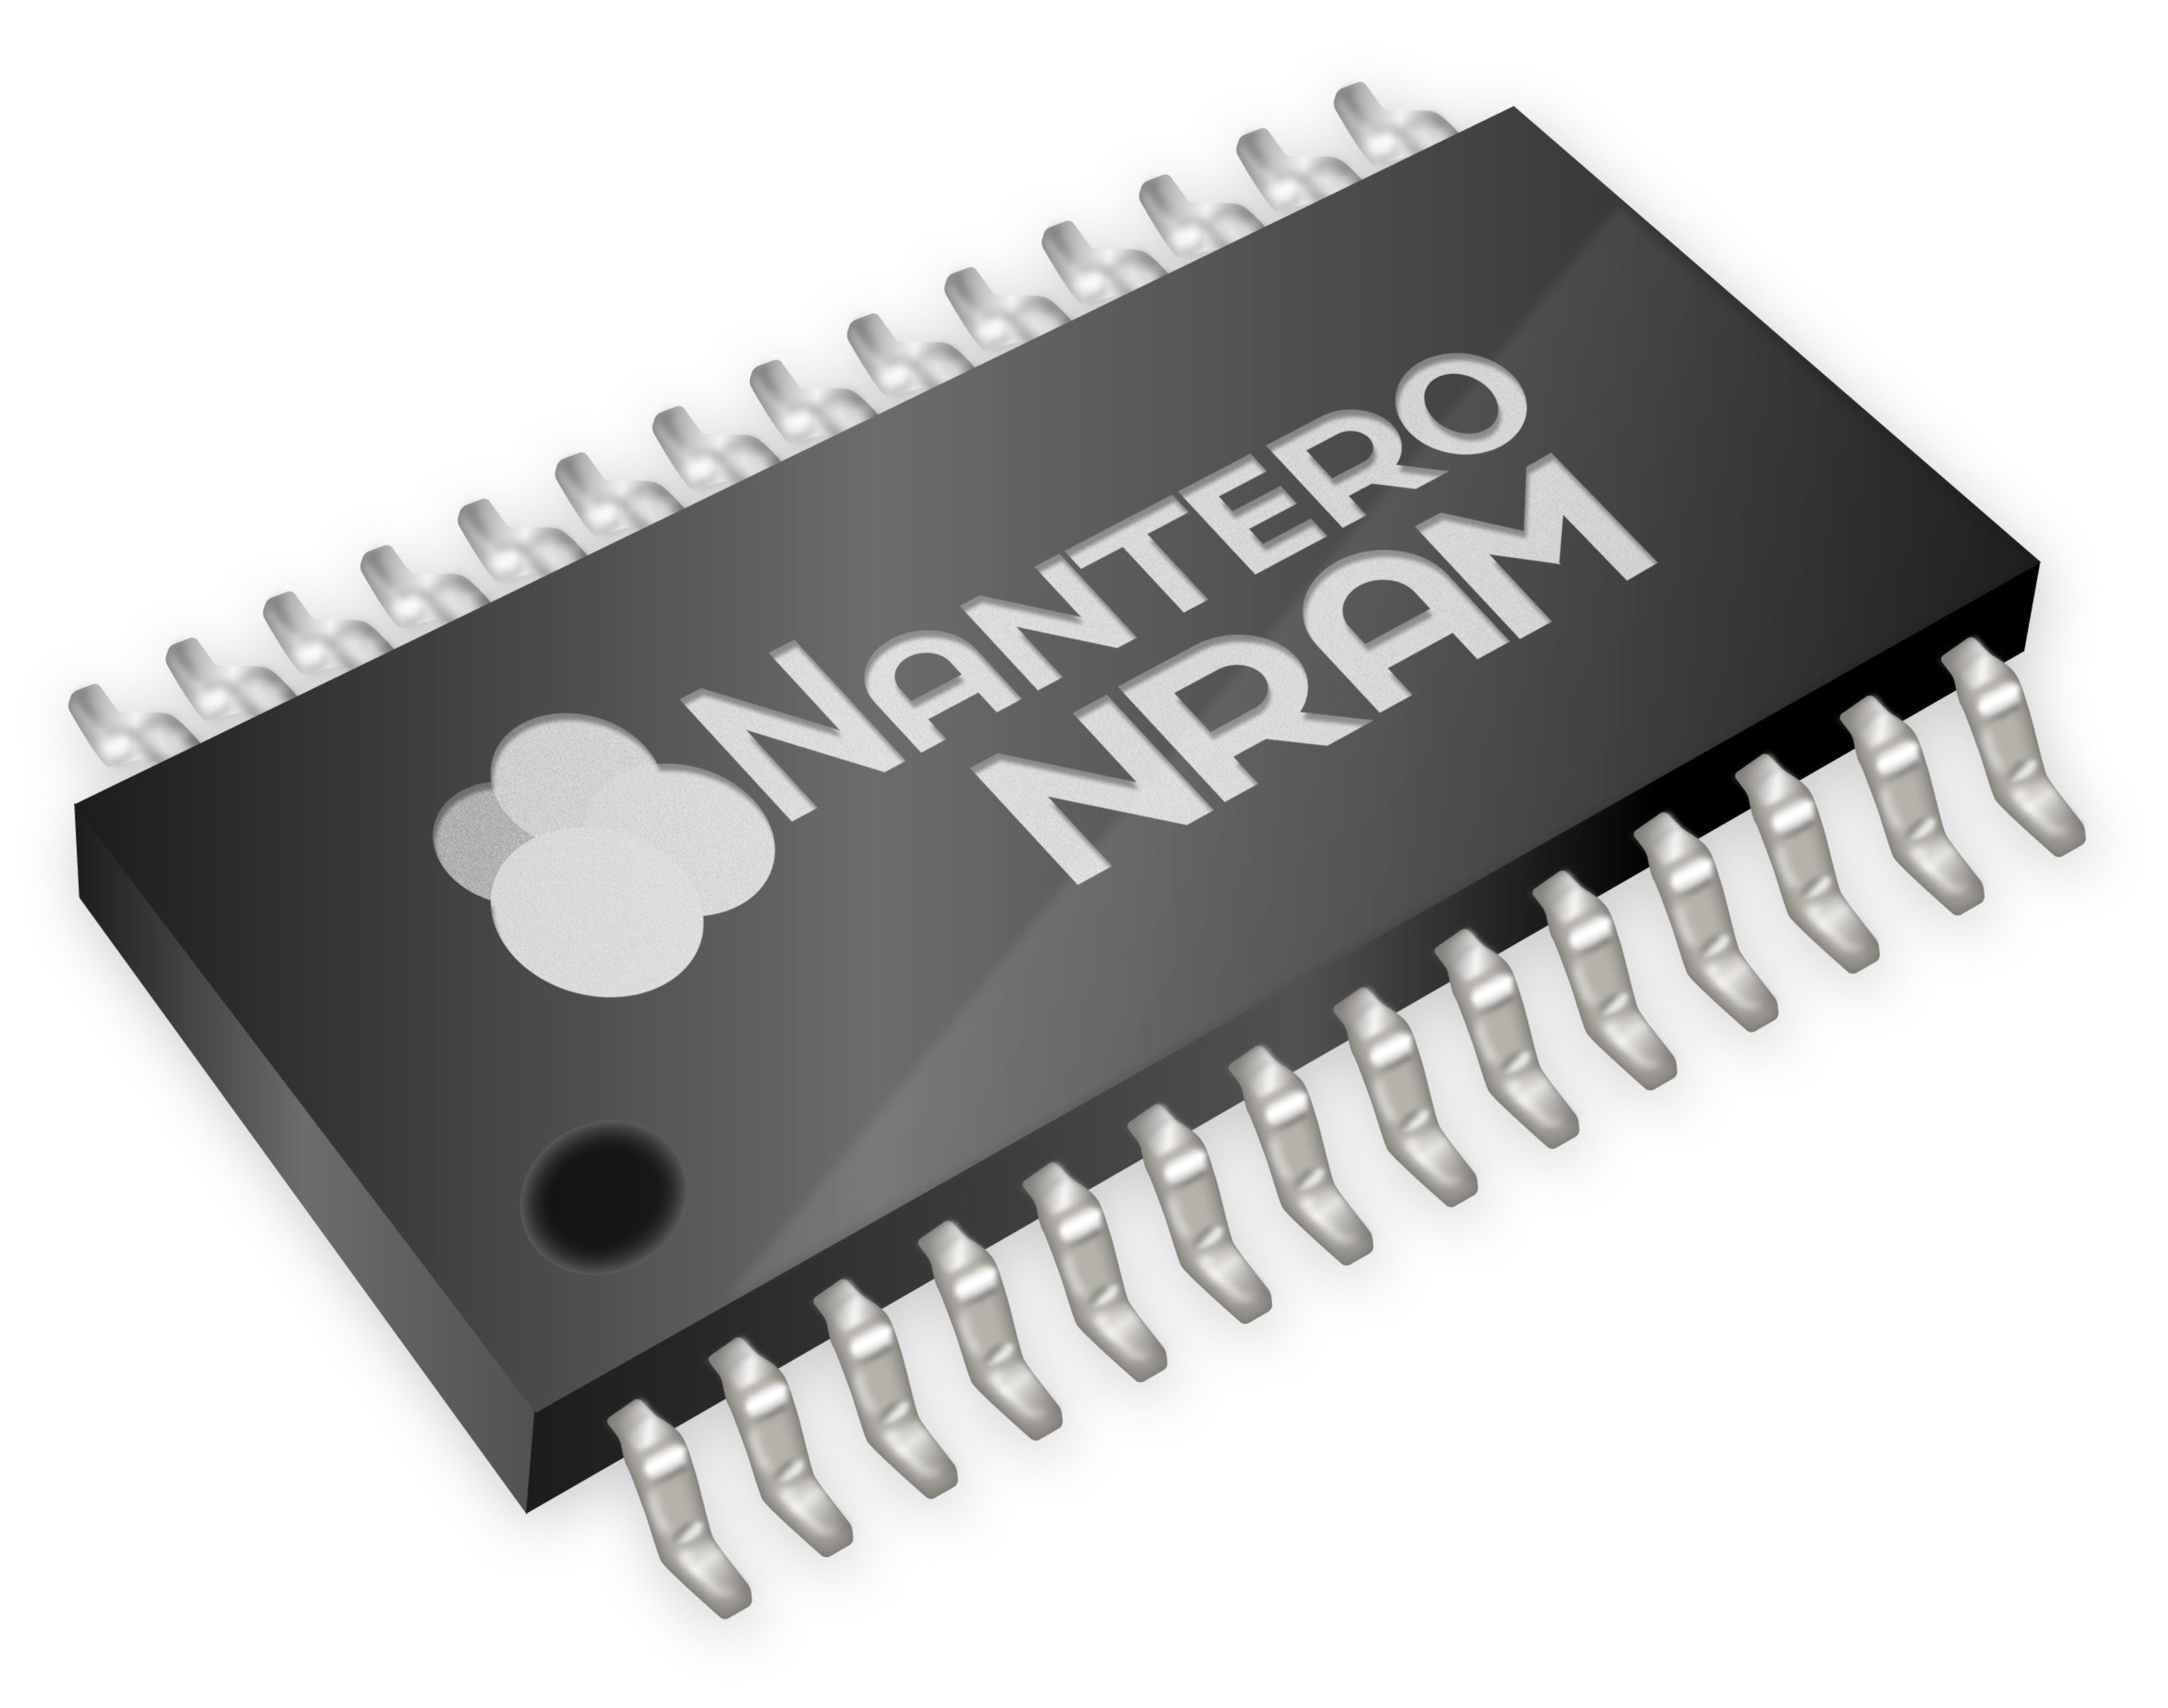 Nantero NRAM:  Superfast, Ultra-High-Density Non-Volatile Memory